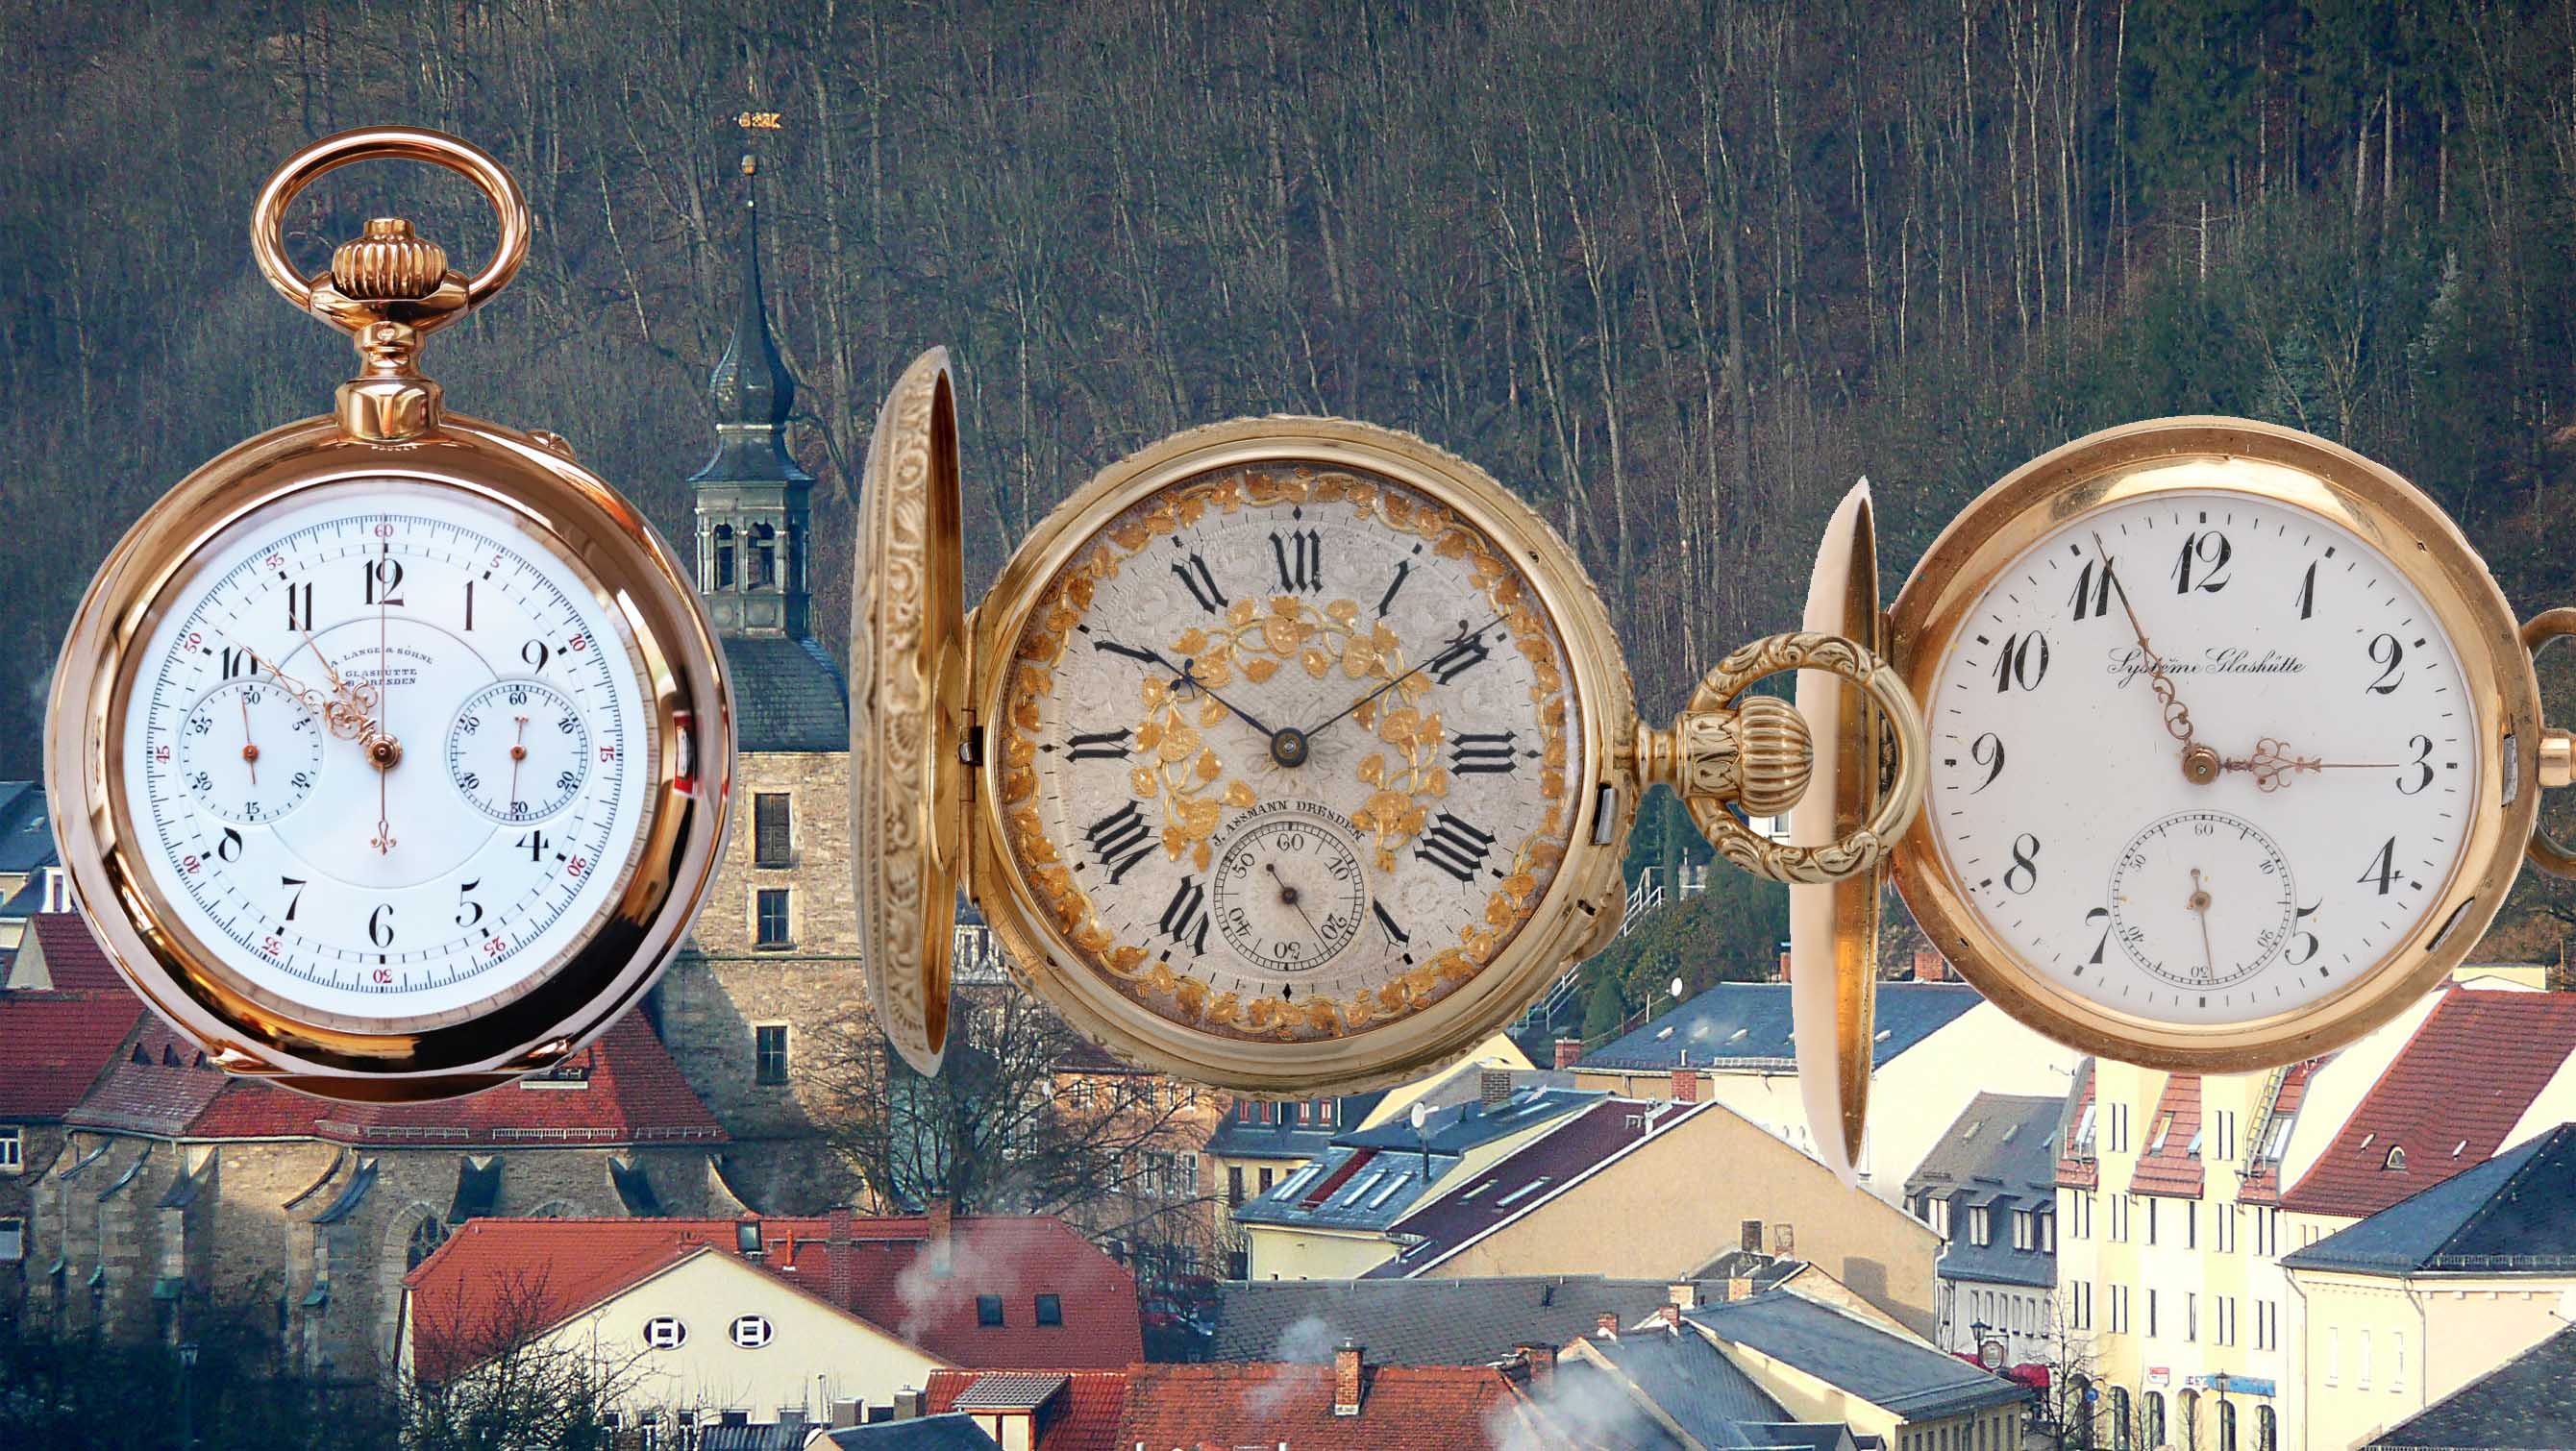 IN-DEPTH: The history of the Glashütte watch region